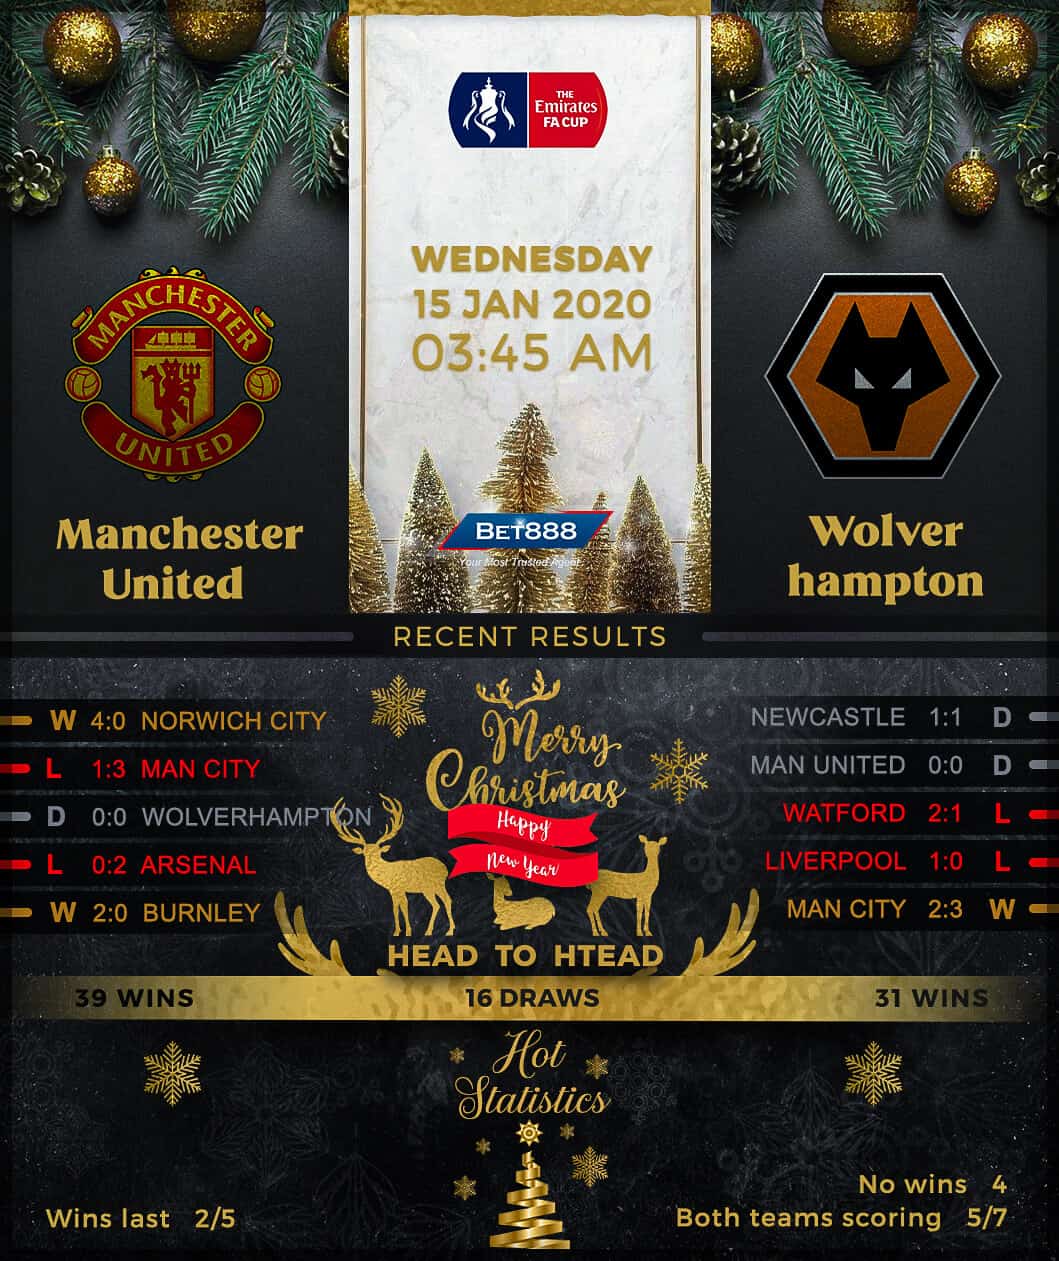 Manchester United vs Wovlerhampton Wanderers﻿ 15/01/20